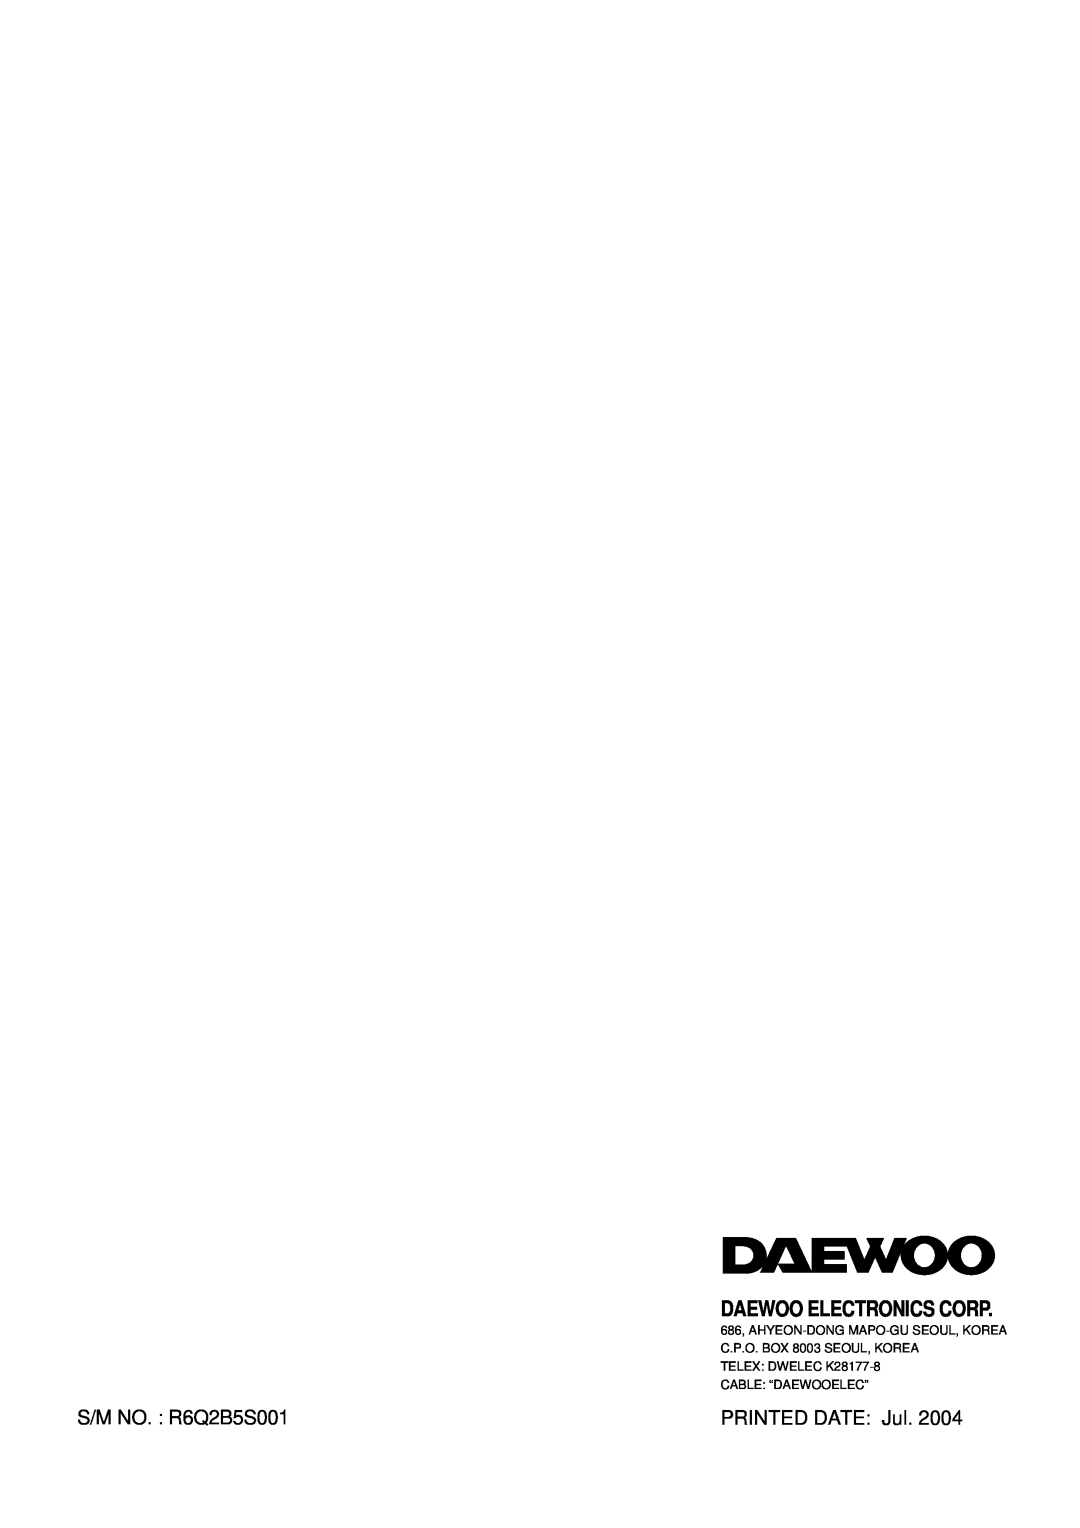 Daewoo KOR-6Q2B5S Daewoo Electronics Corp, S/M NO. R6Q2B5S001, PRINTED DATE Jul, TELEX DWELEC K28177-8 CABLE “DAEWOOELEC” 